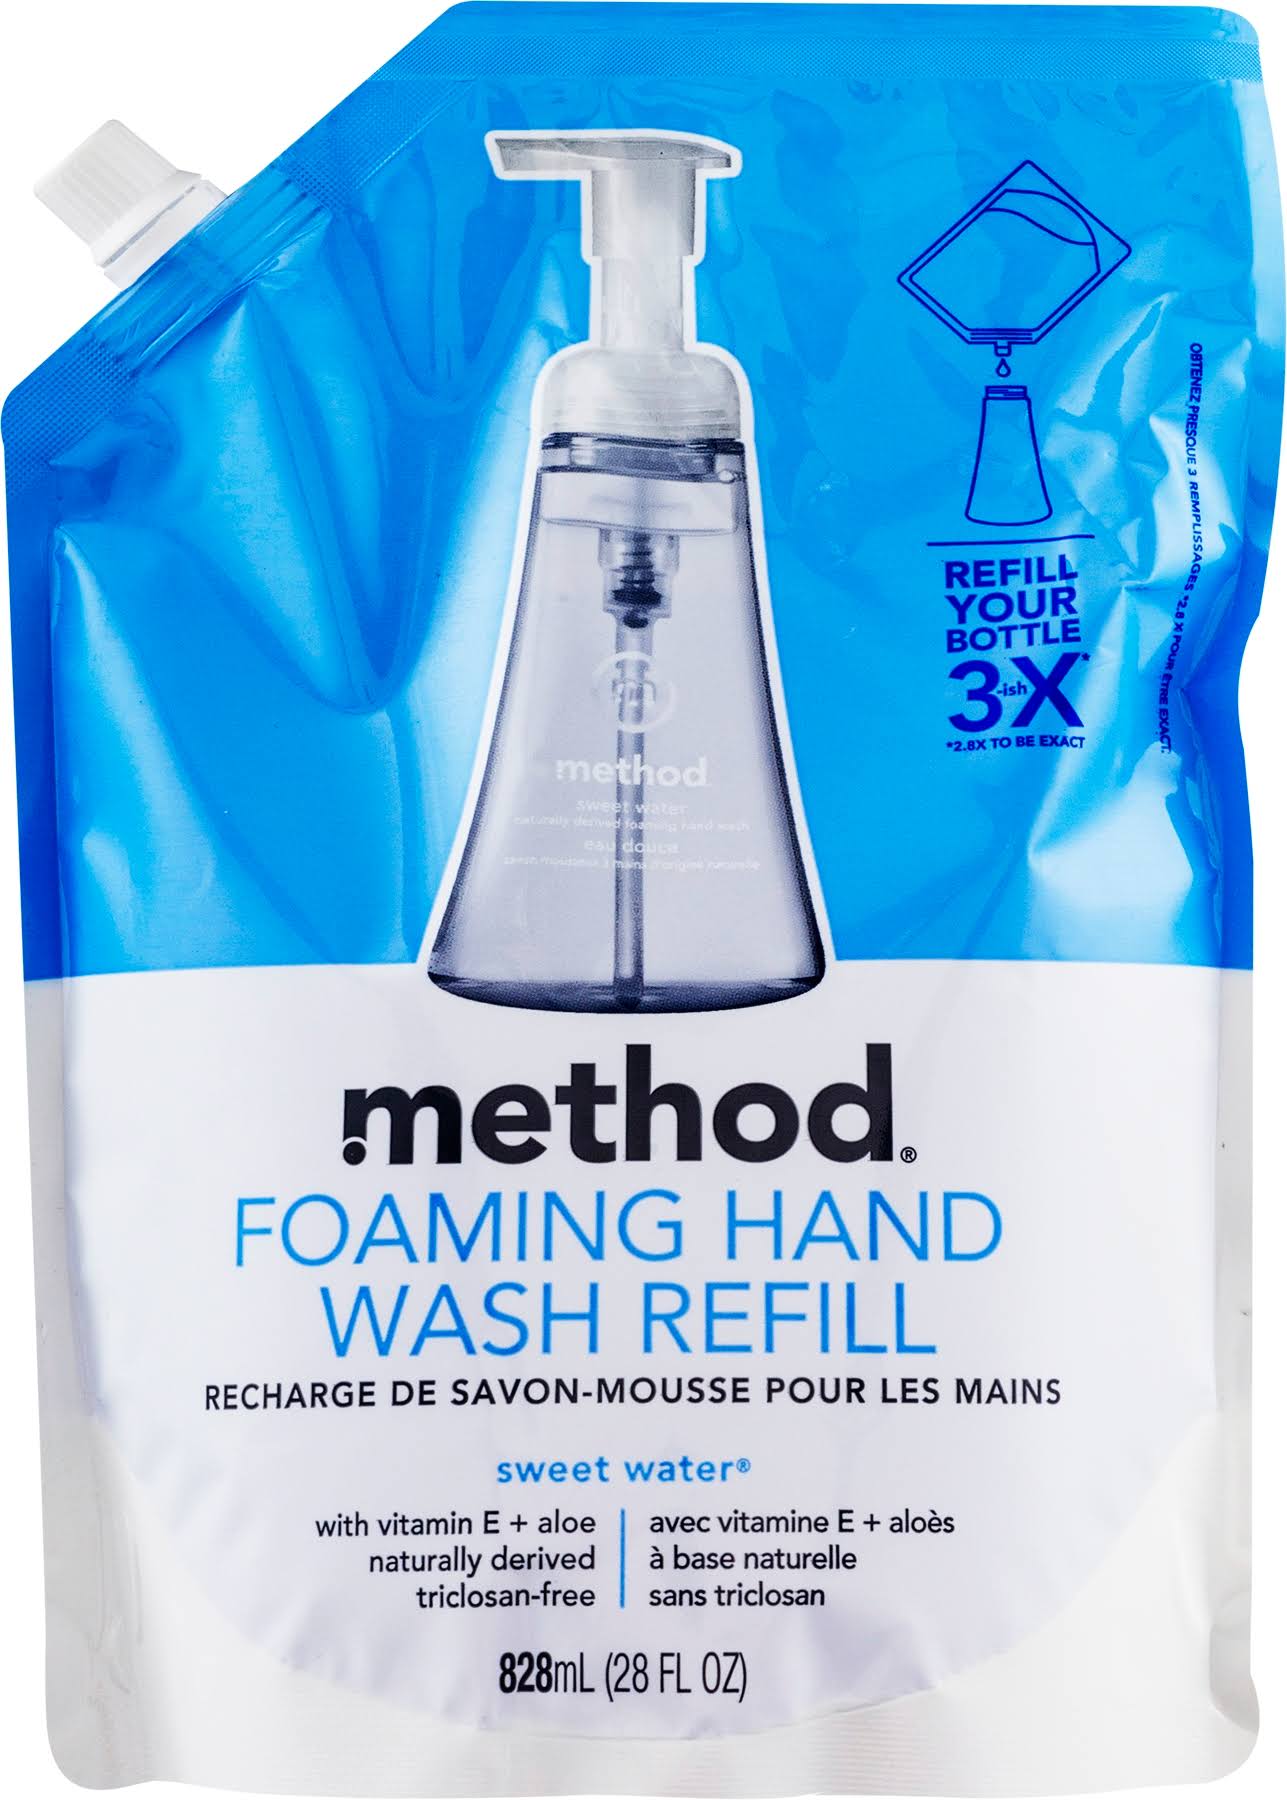 Method Foaming Hand Wash Refill - Sweet Water, 28oz